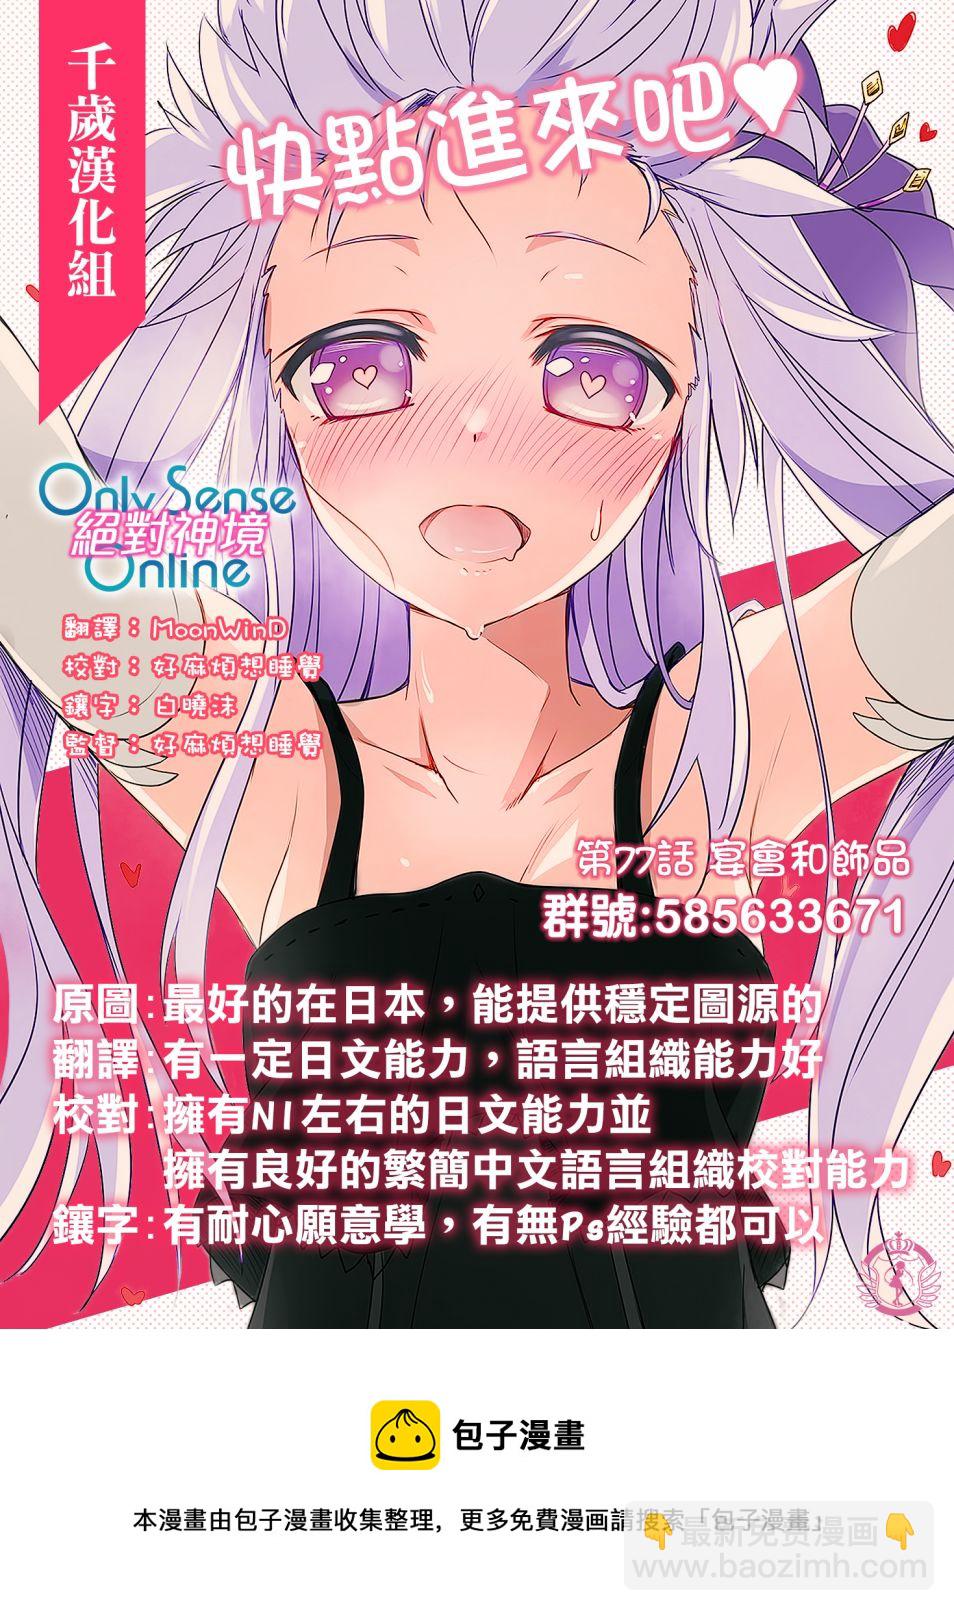 Only Sense Online - 第77話 - 3